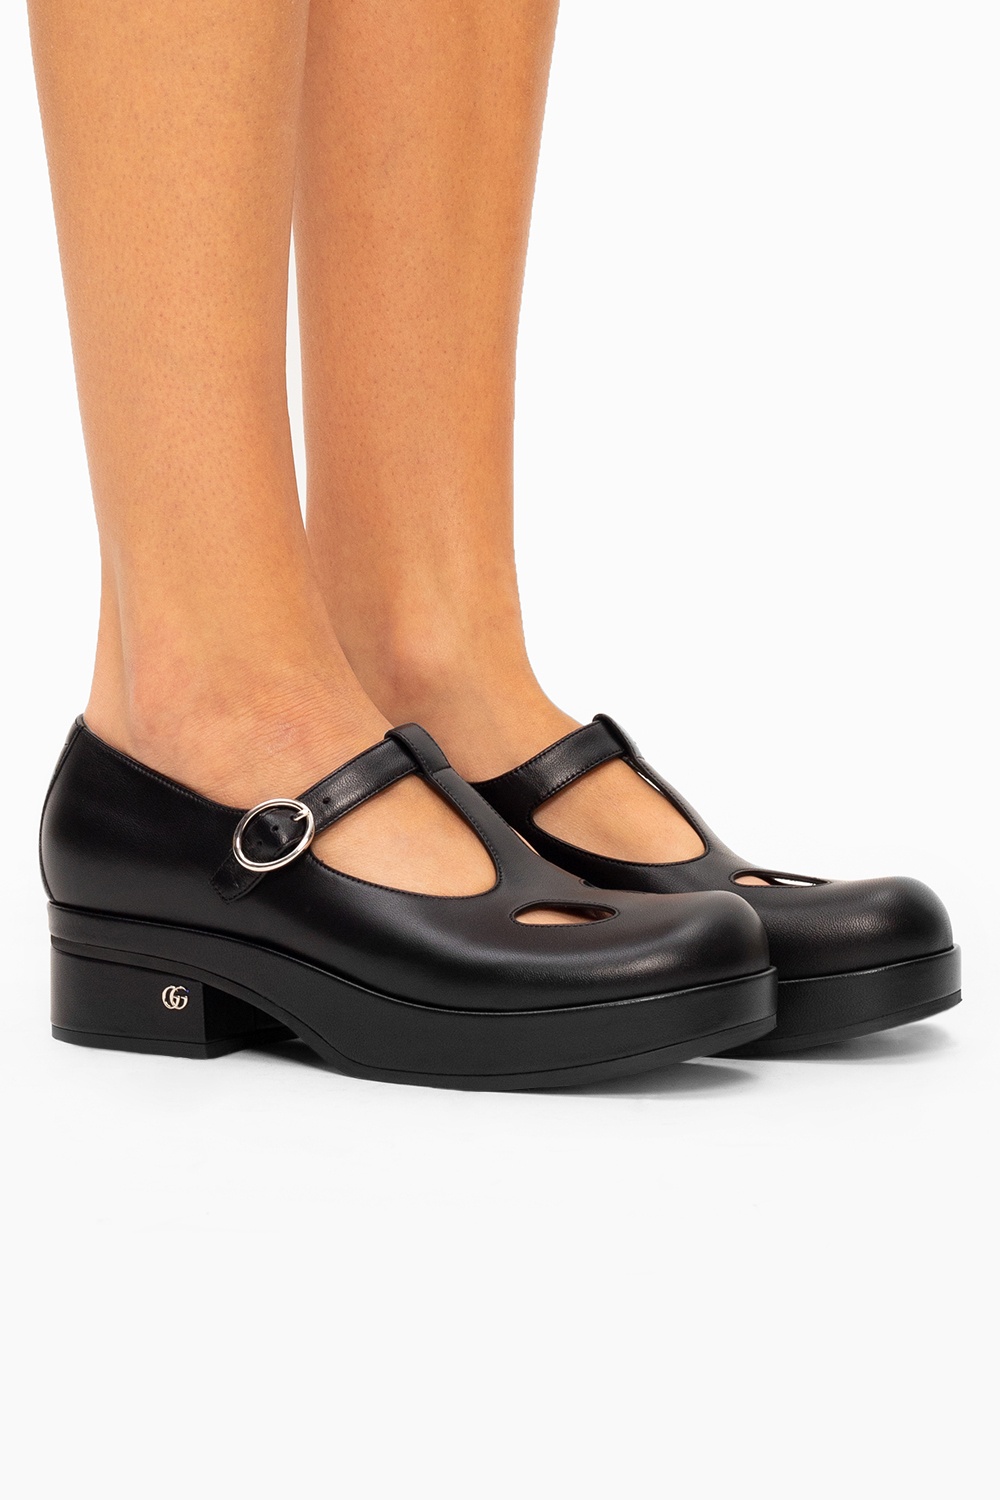 Hr Fahrenheit fortjener Mary Jane' low-heel shoes Gucci - IetpShops US